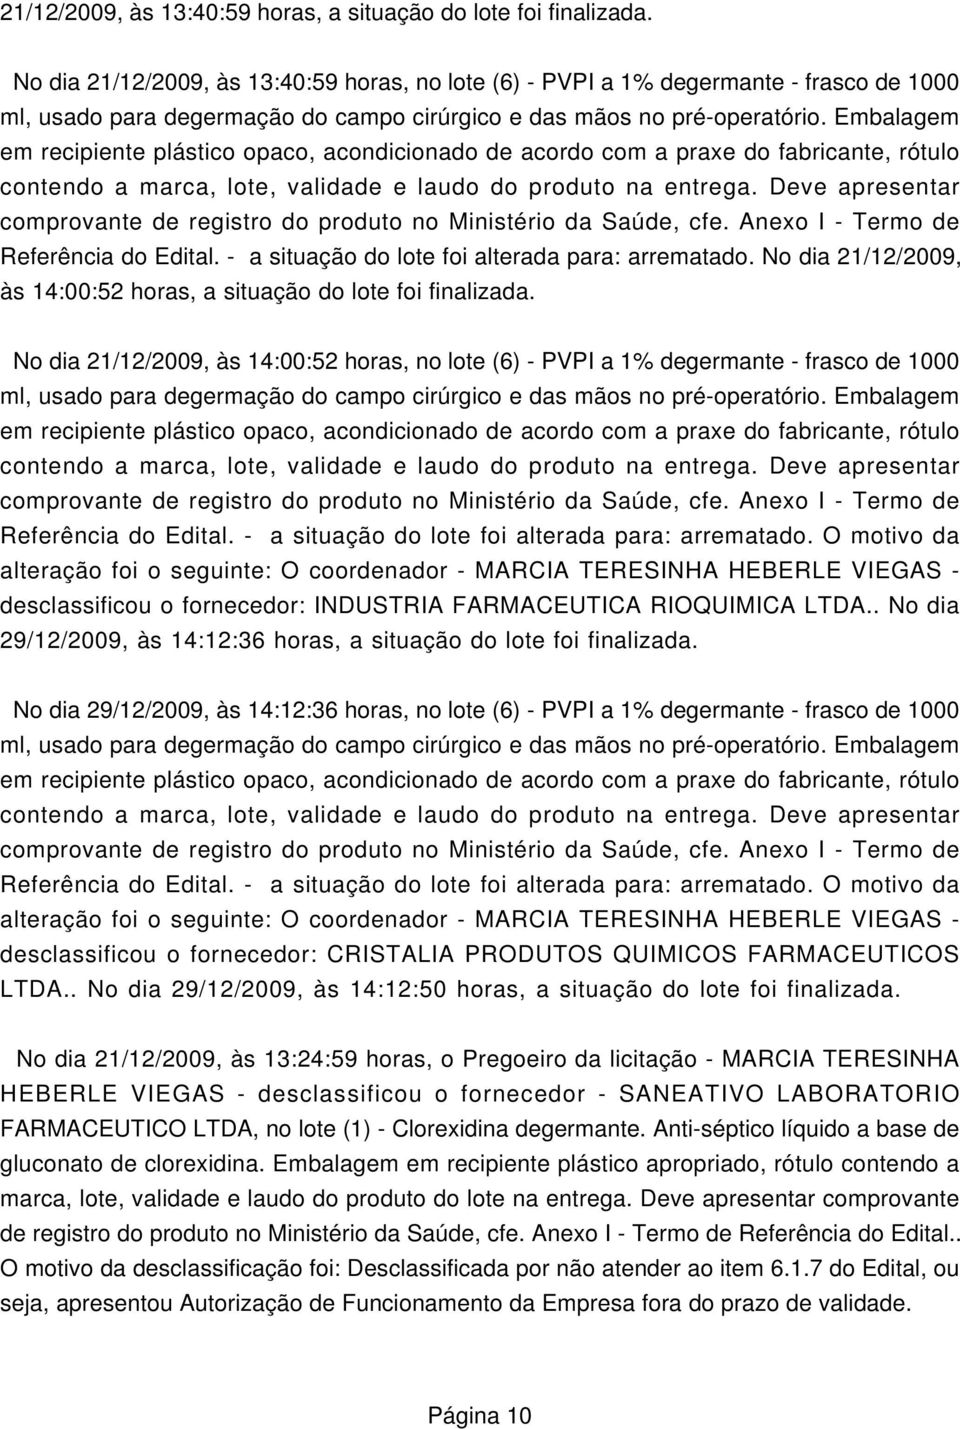 No dia 21/12/2009, às 14:00:52 horas, no lote (6) - PVPI a 1% degermante - frasco de 1000 desclassificou o fornecedor: INDUSTRIA FARMACEUTICA RIOQUIMICA LTDA.